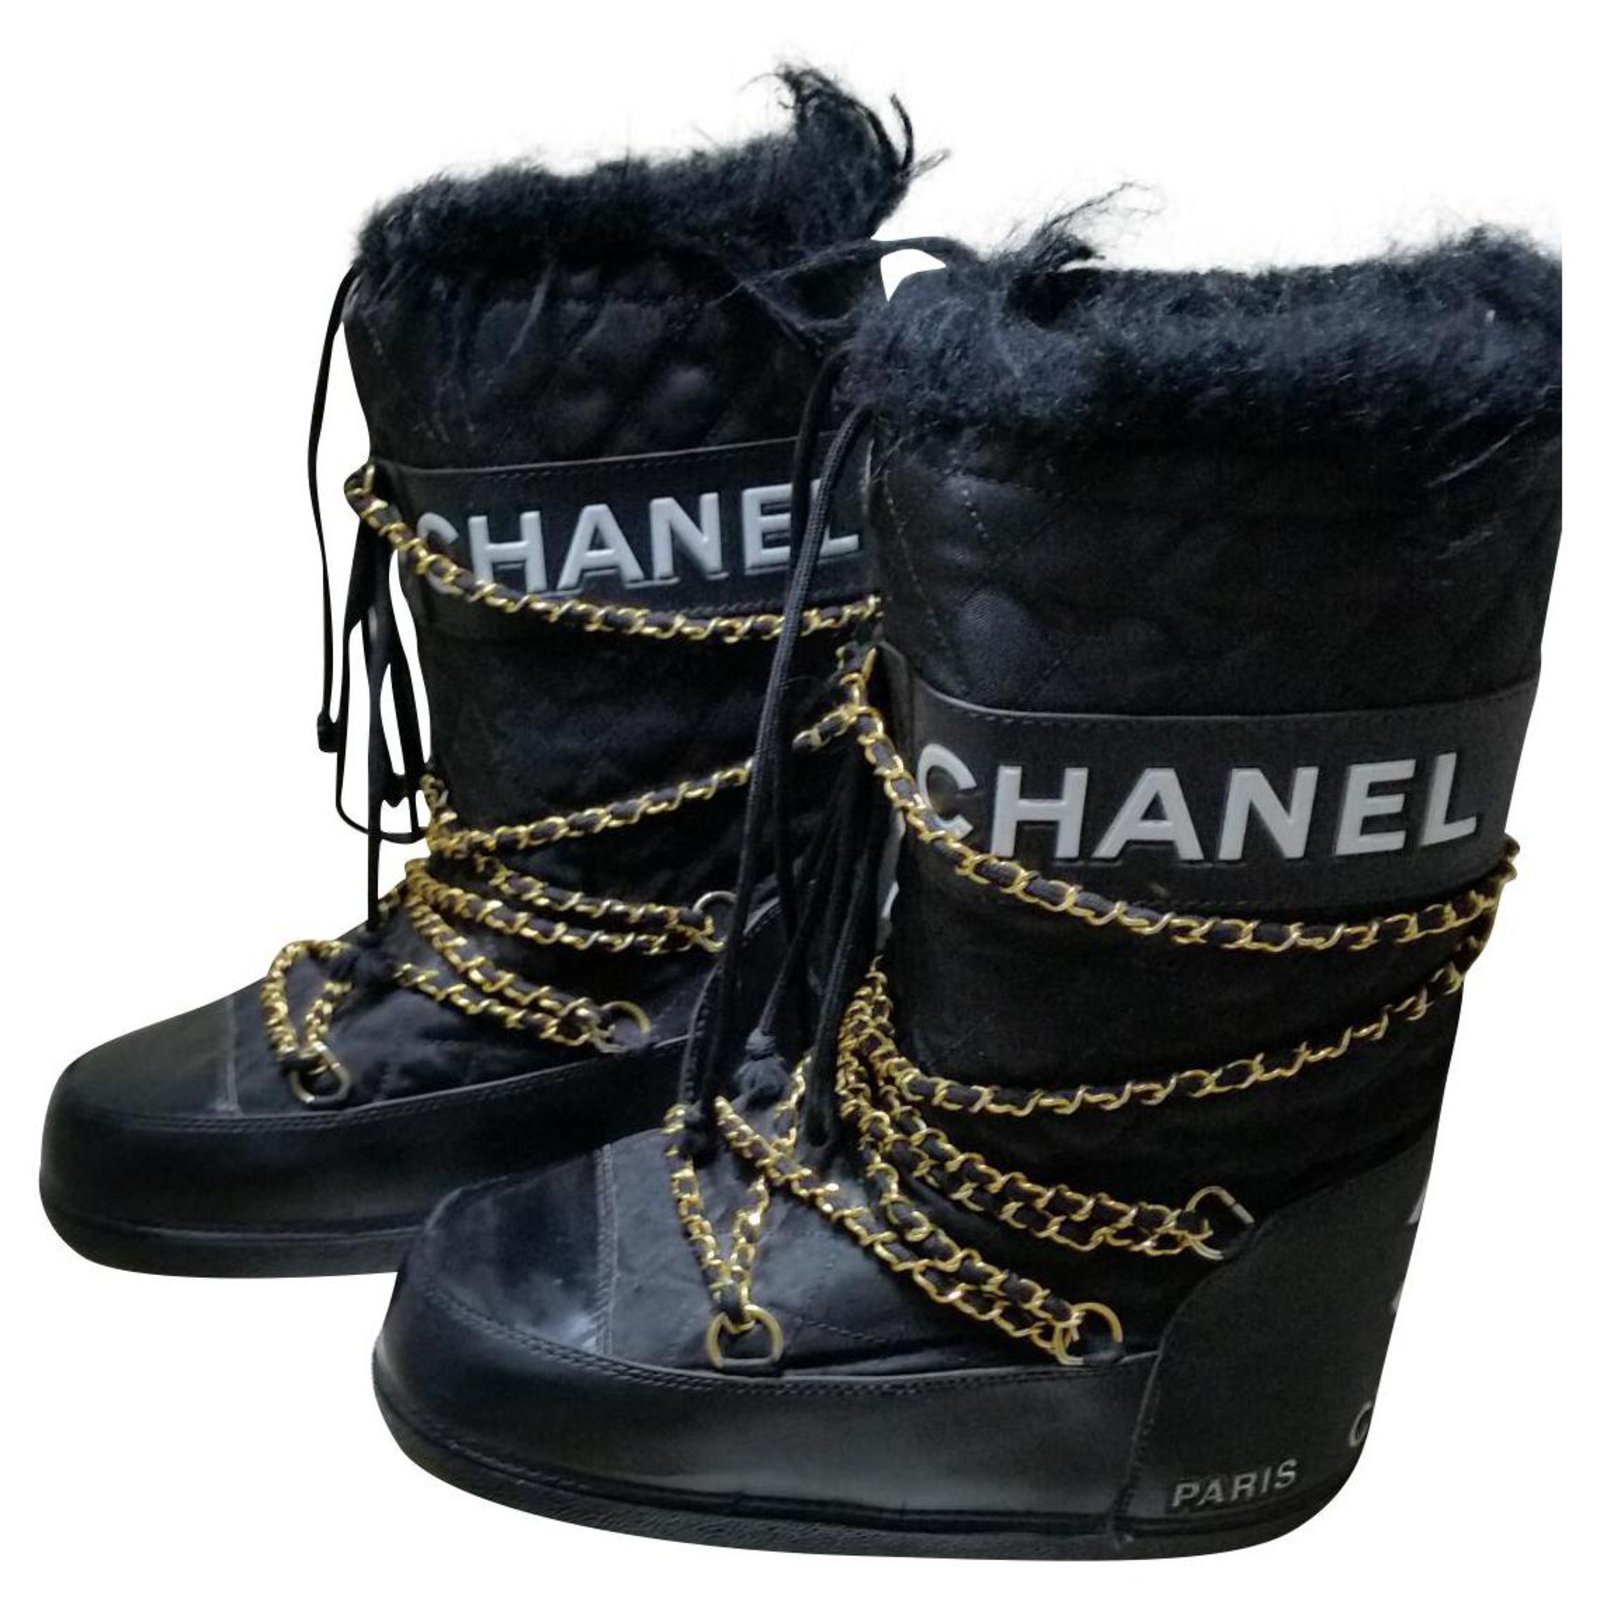 Chanel Apres Ski Moon Boots - Black Boots, Shoes - CHA348255